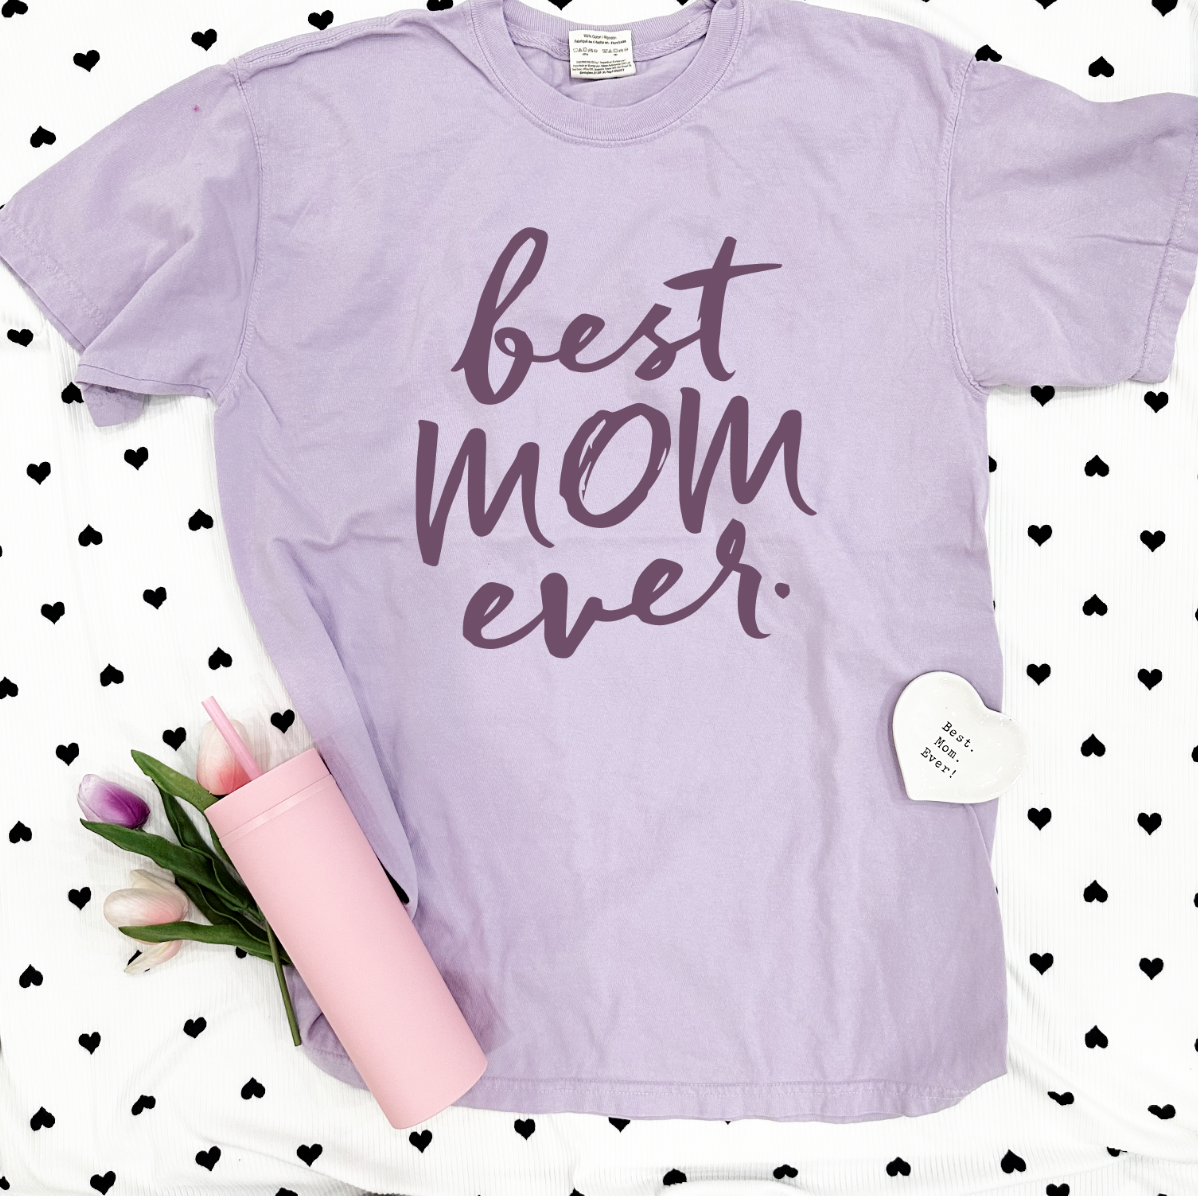 MOM LIFE 2023: Best Mom Ever. (SHORTSLEEVE)